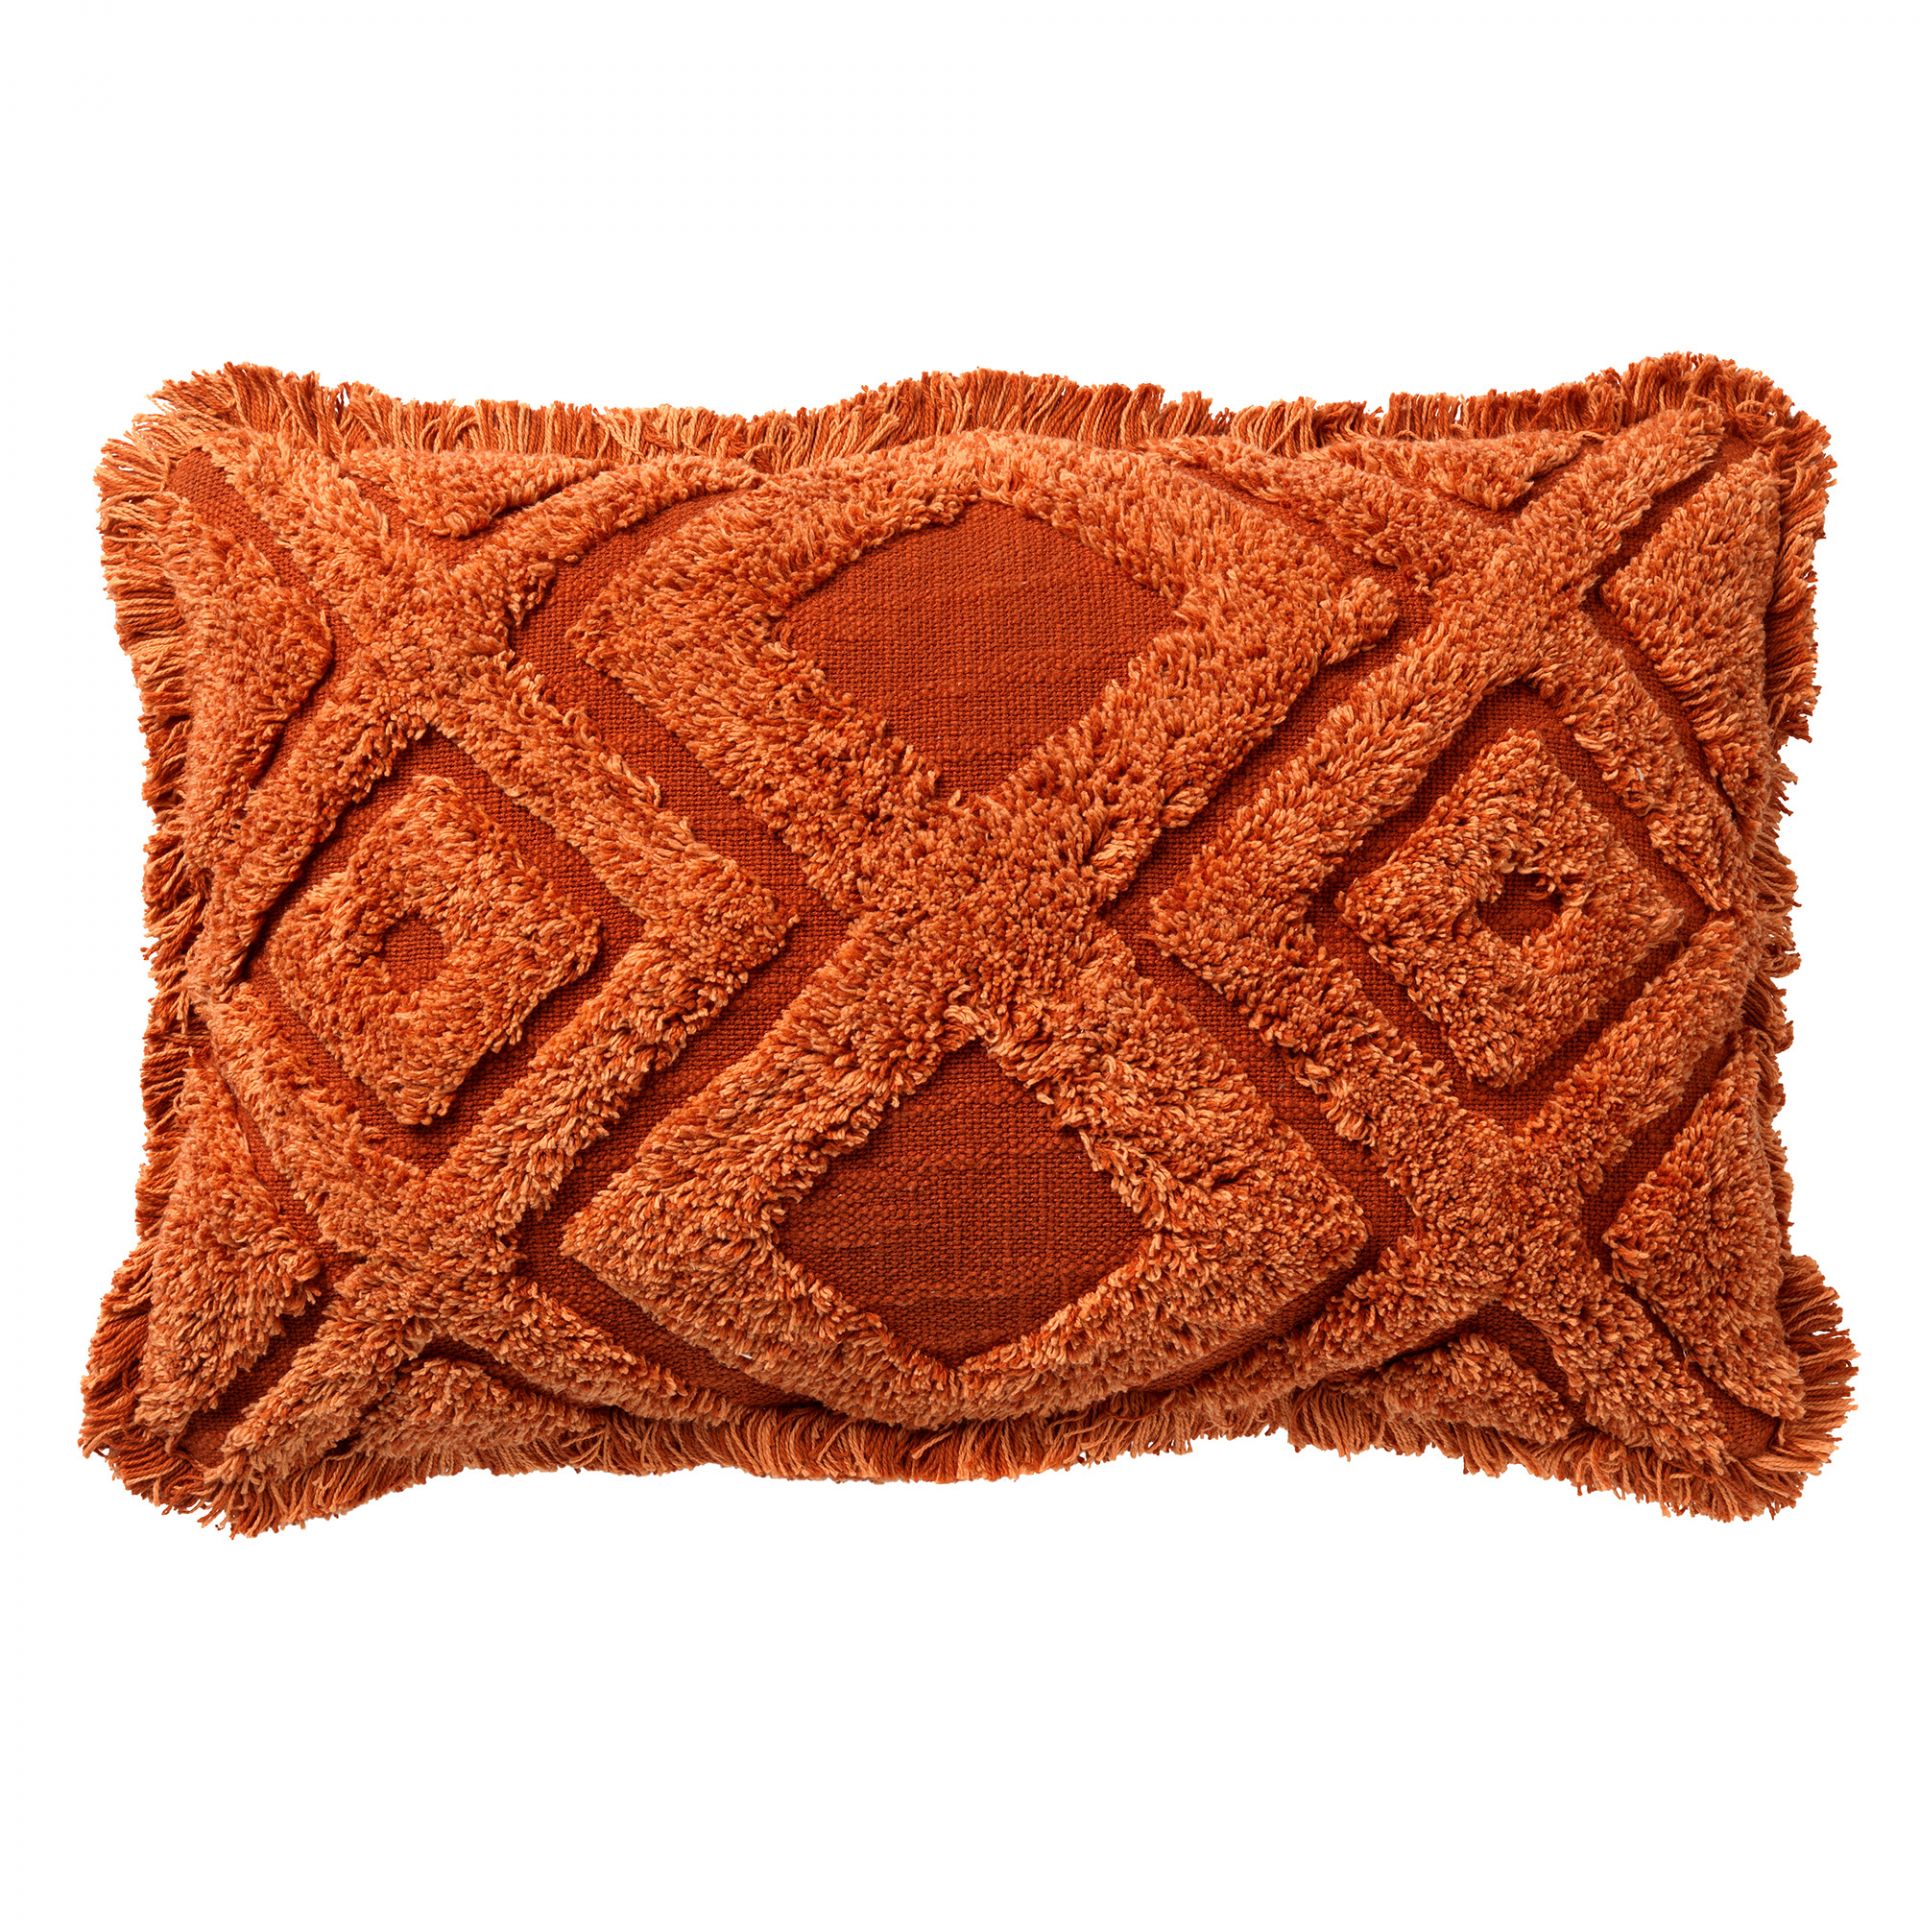 BOHO - Cushion cotton 40x60 cm Potters Clay - orange